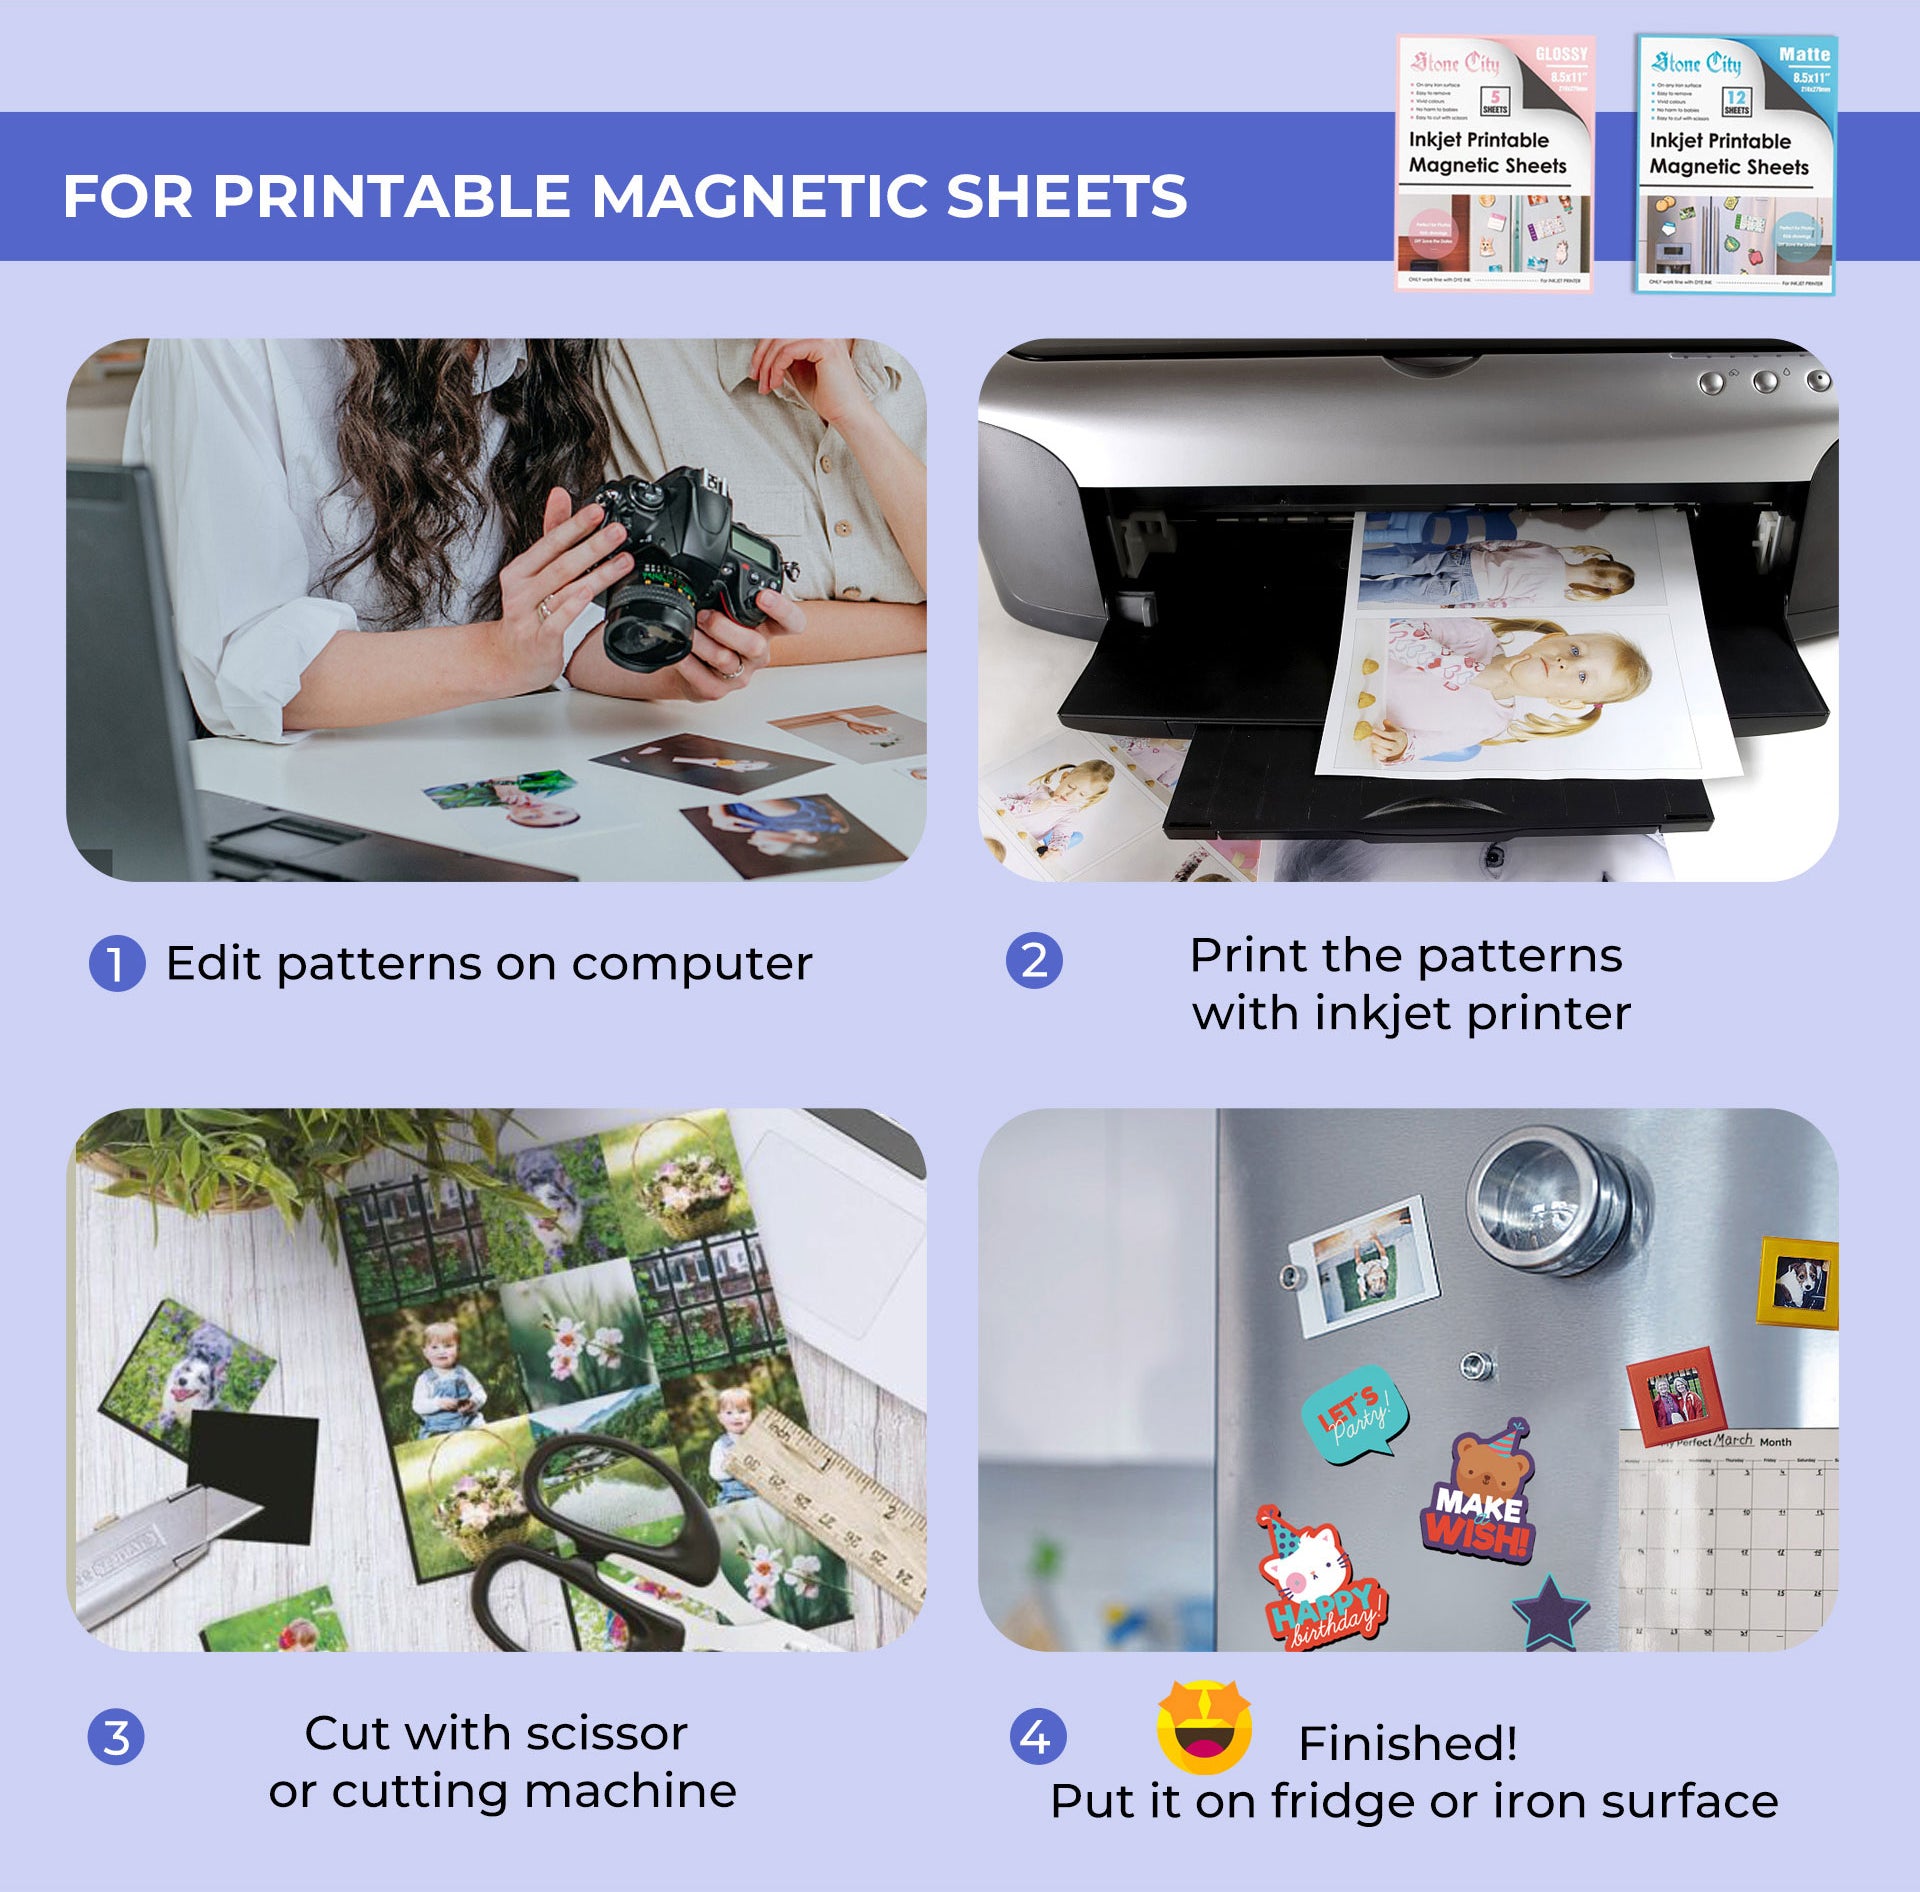 Shop Glossy Inkjet Printable Magnet Sheets